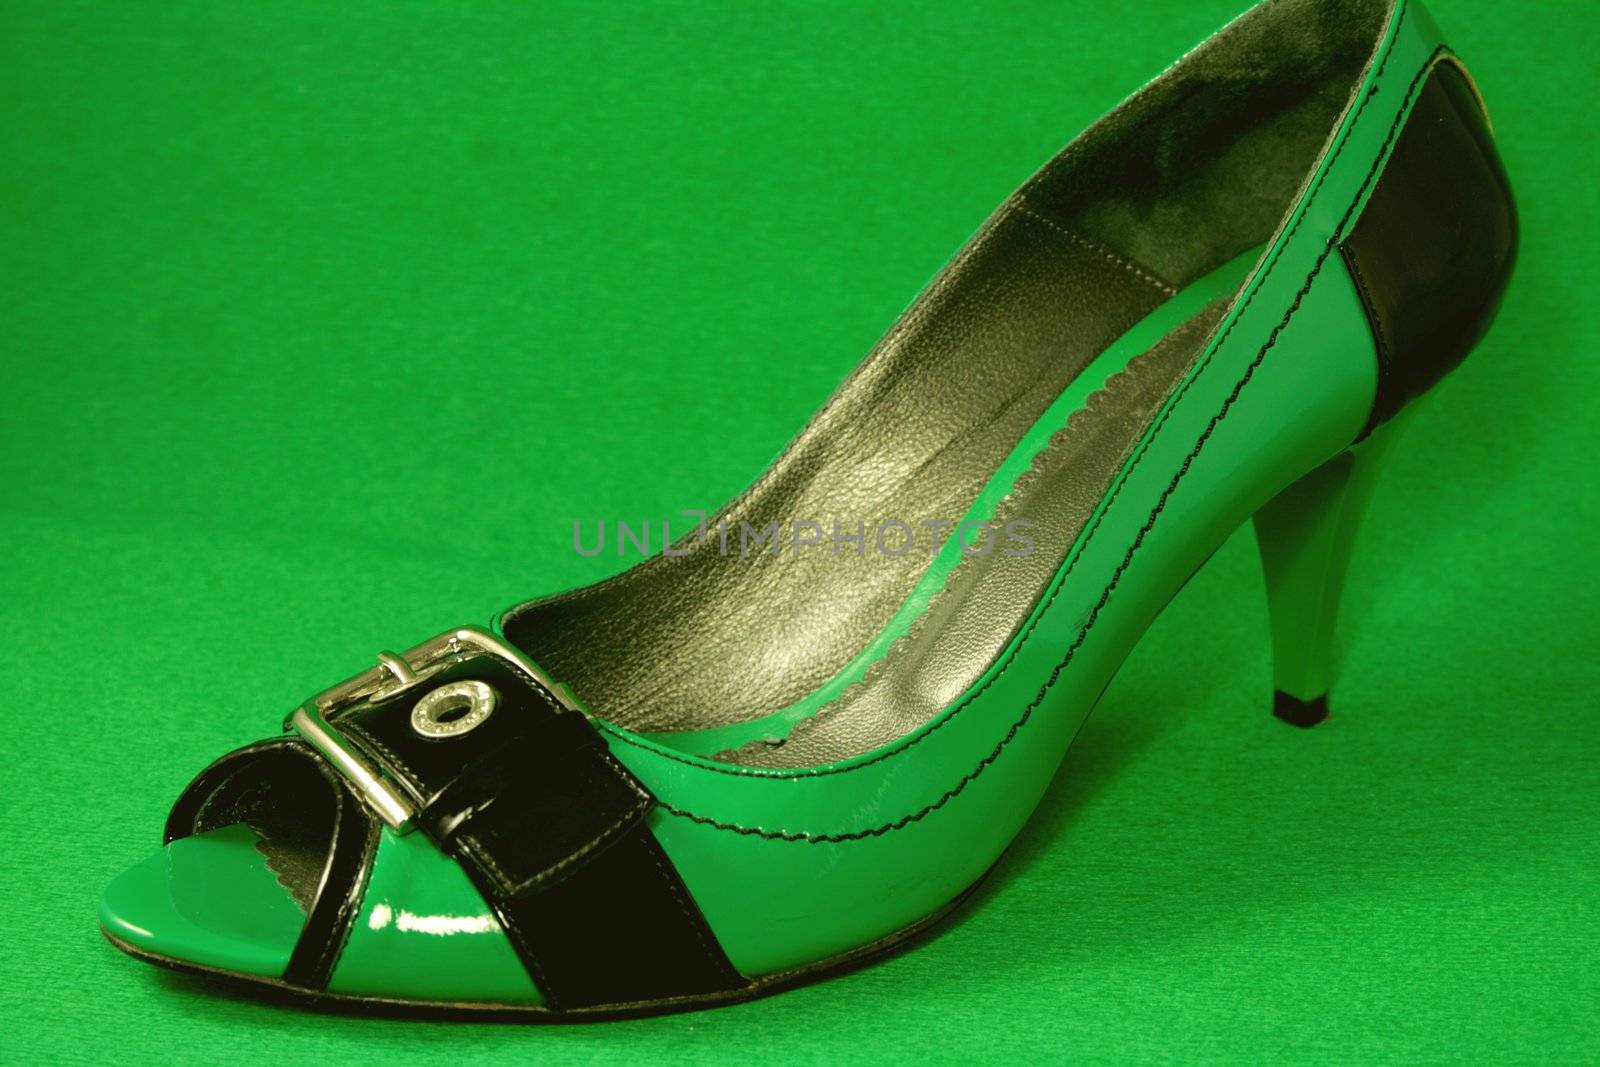 Green High-Heeled Shoes on Green Background by kinkydi